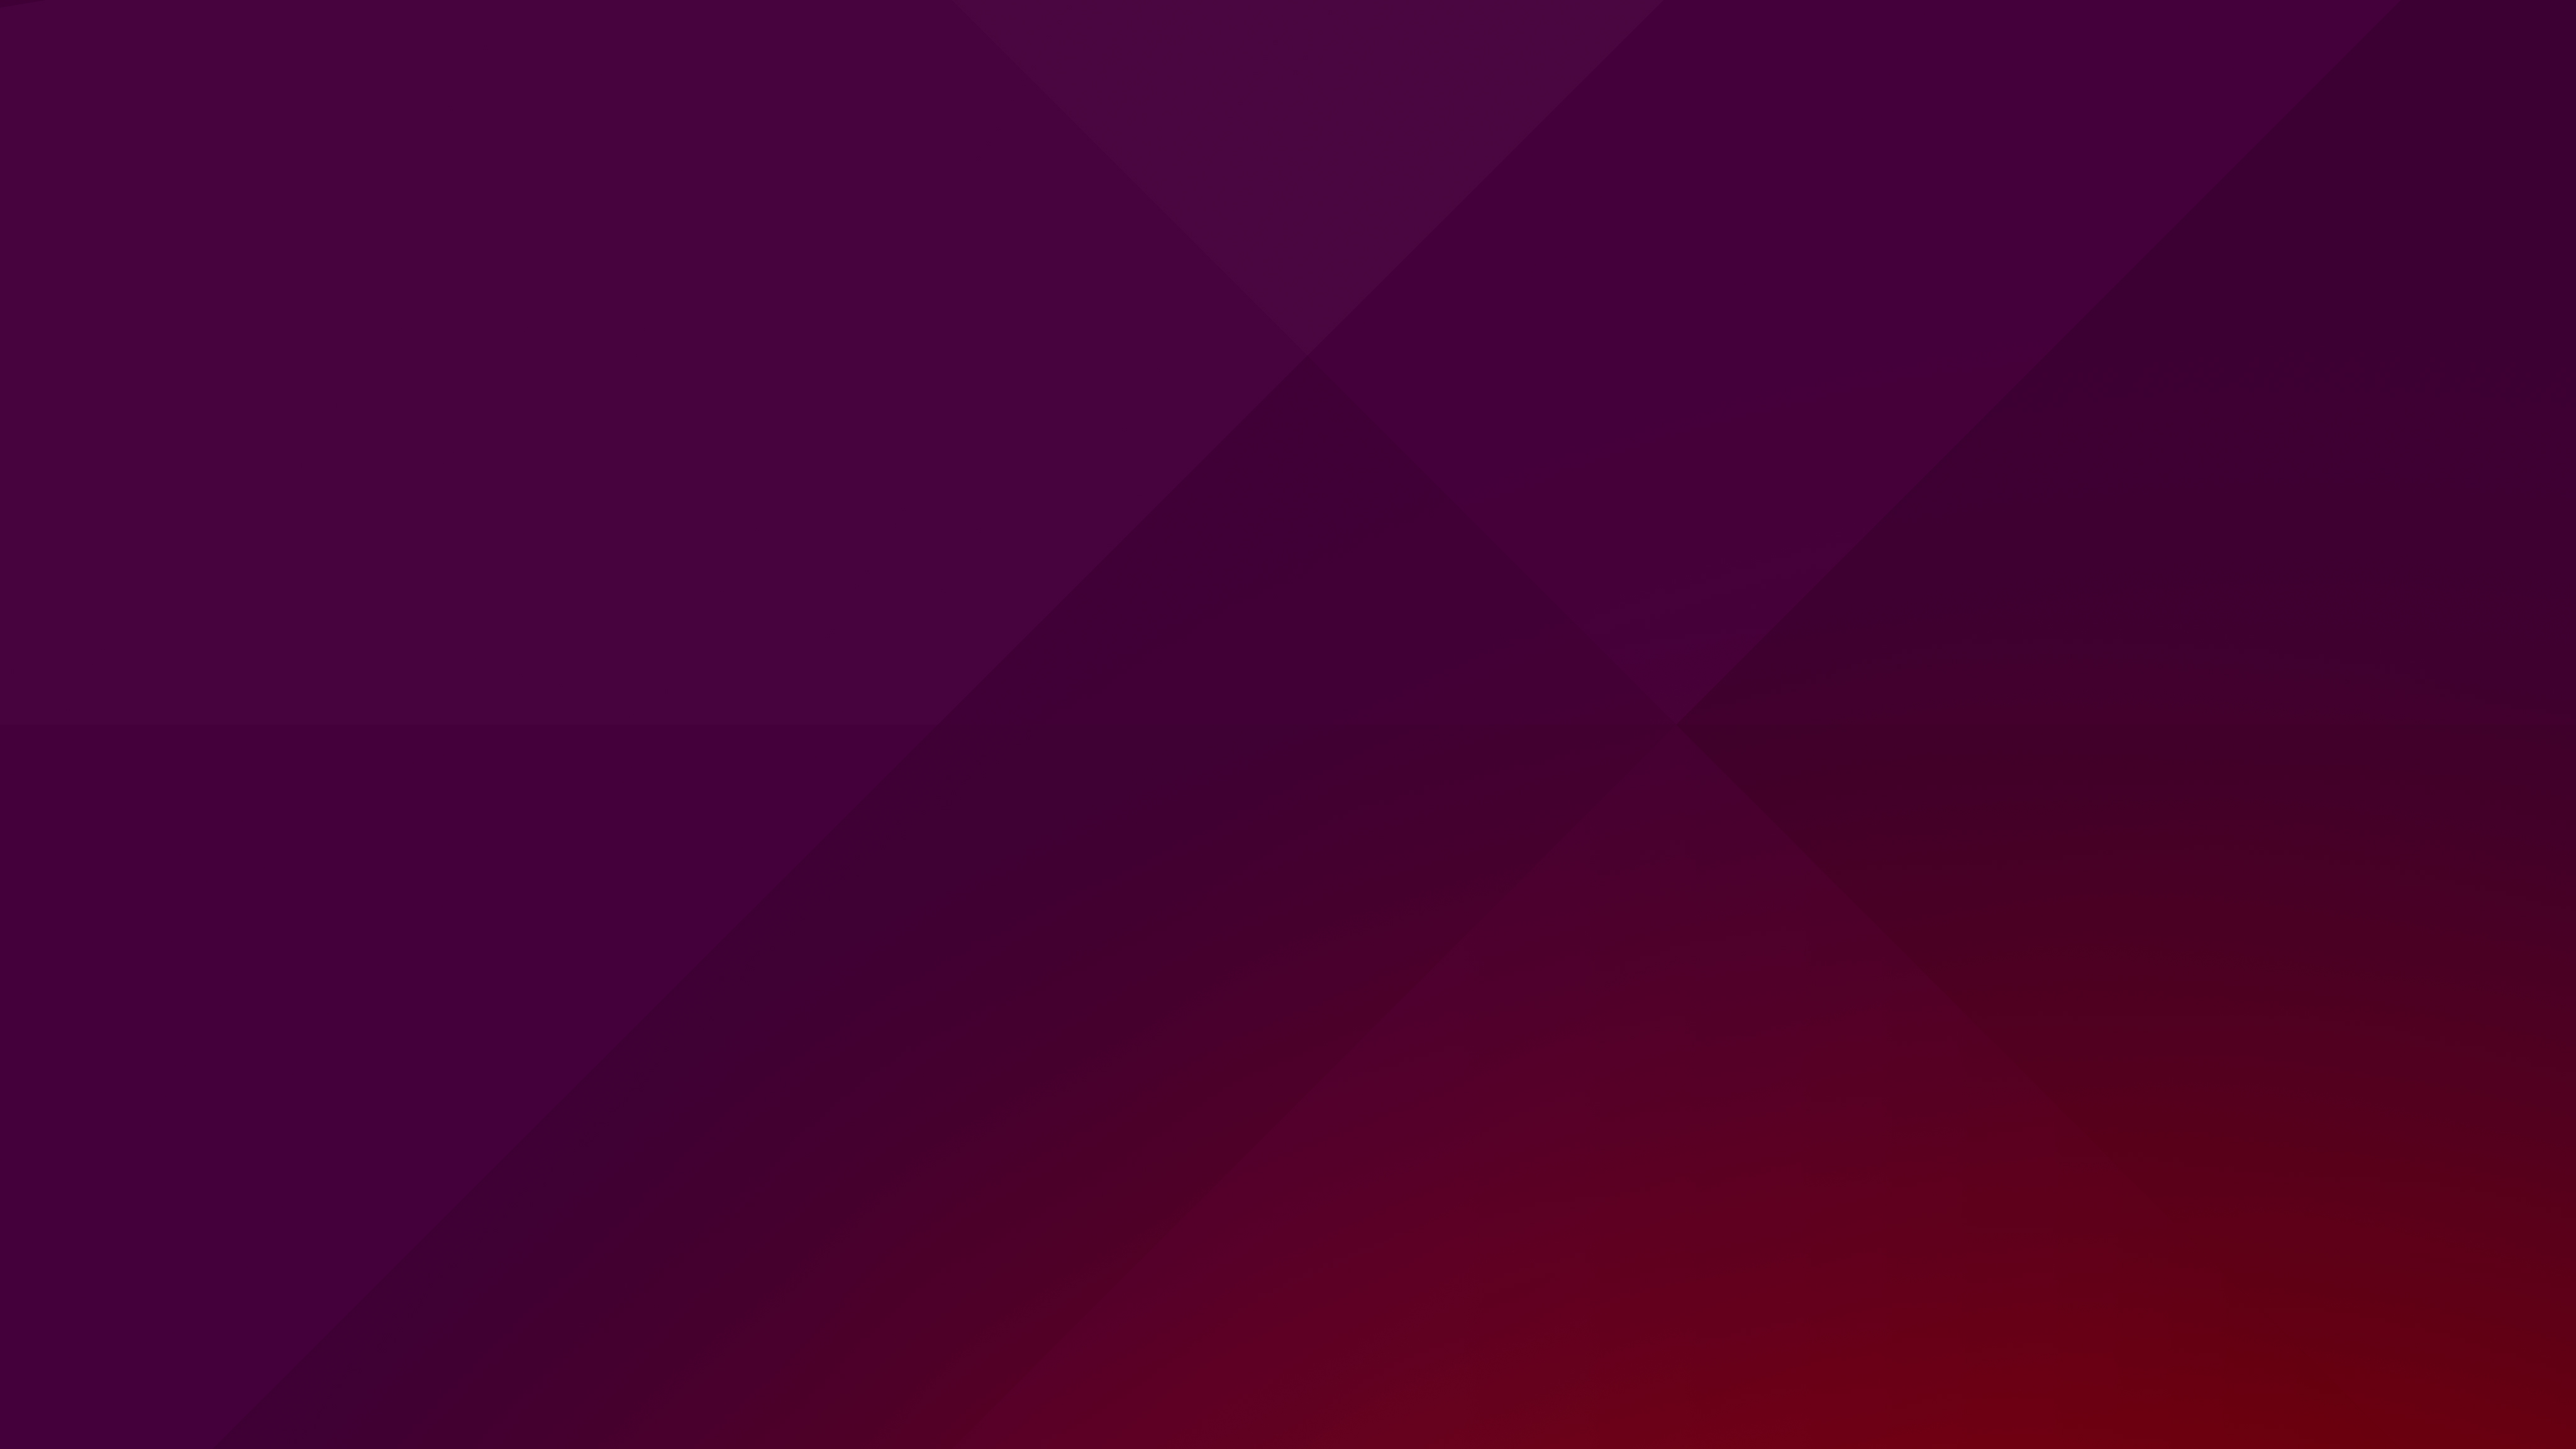 New Ubuntu 15 10 Default Wallpaper Revealed